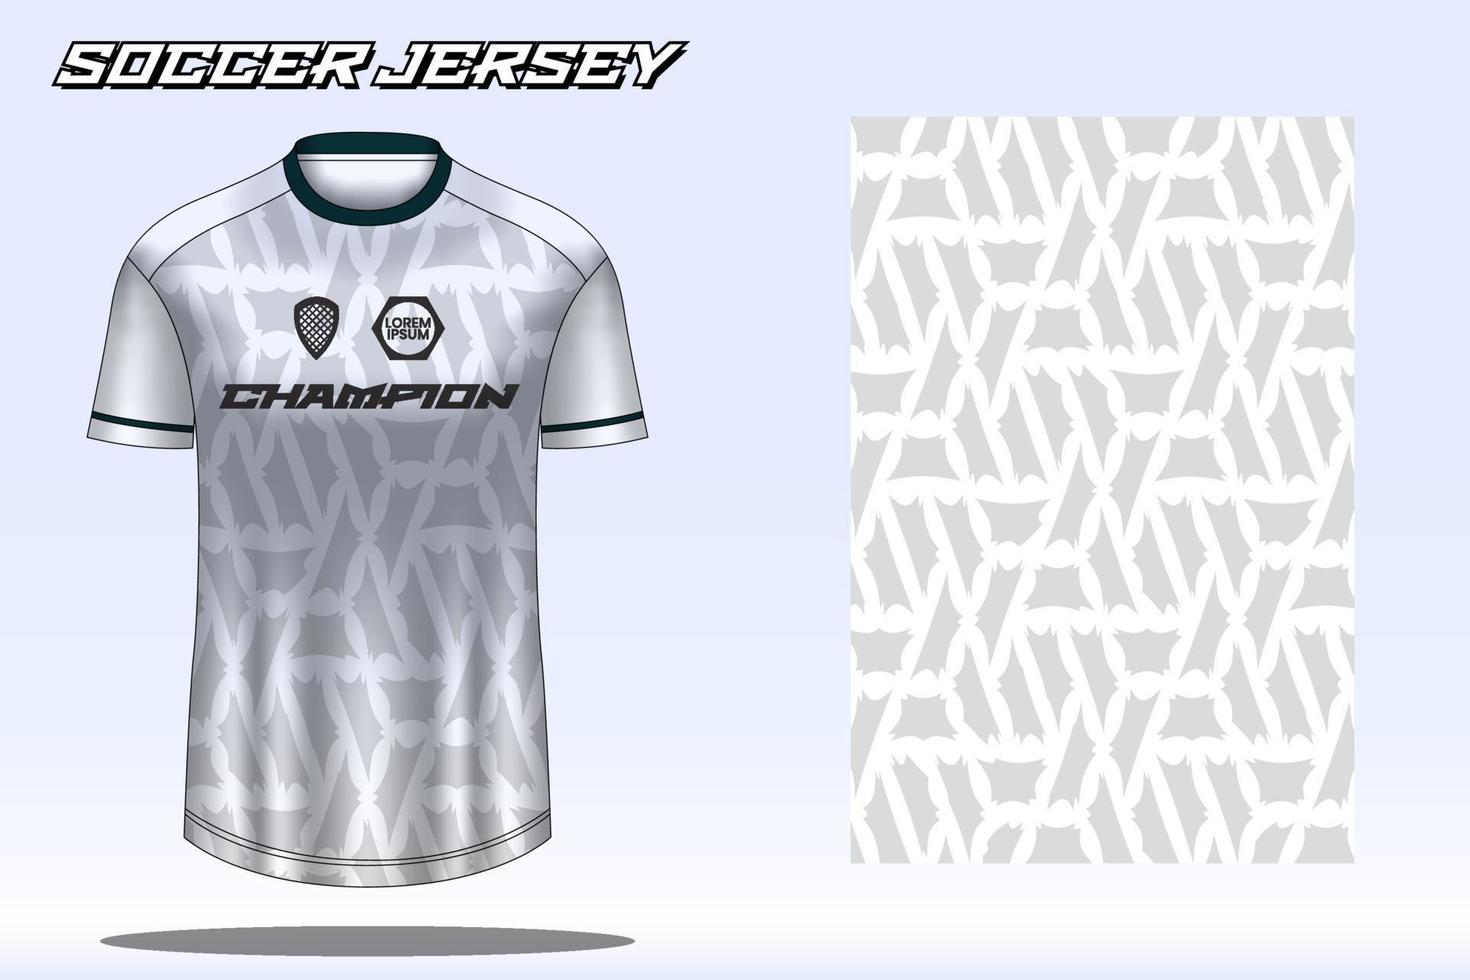 Soccer jersey sport t-shirt design mockup for football club 14 vector